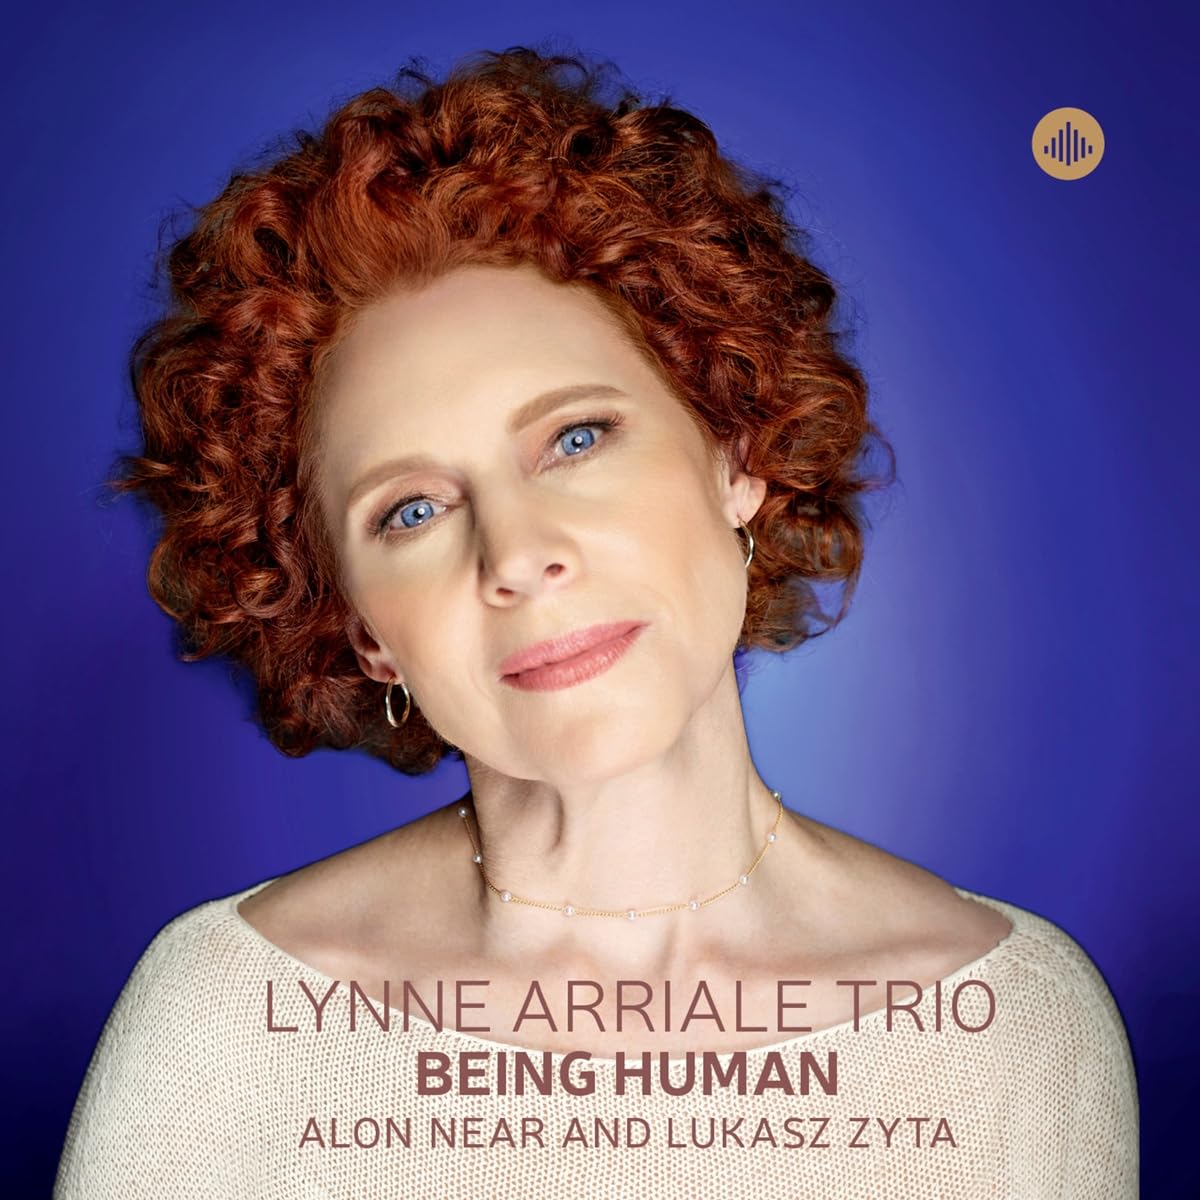 Being Human / Lynn Arriale Trio